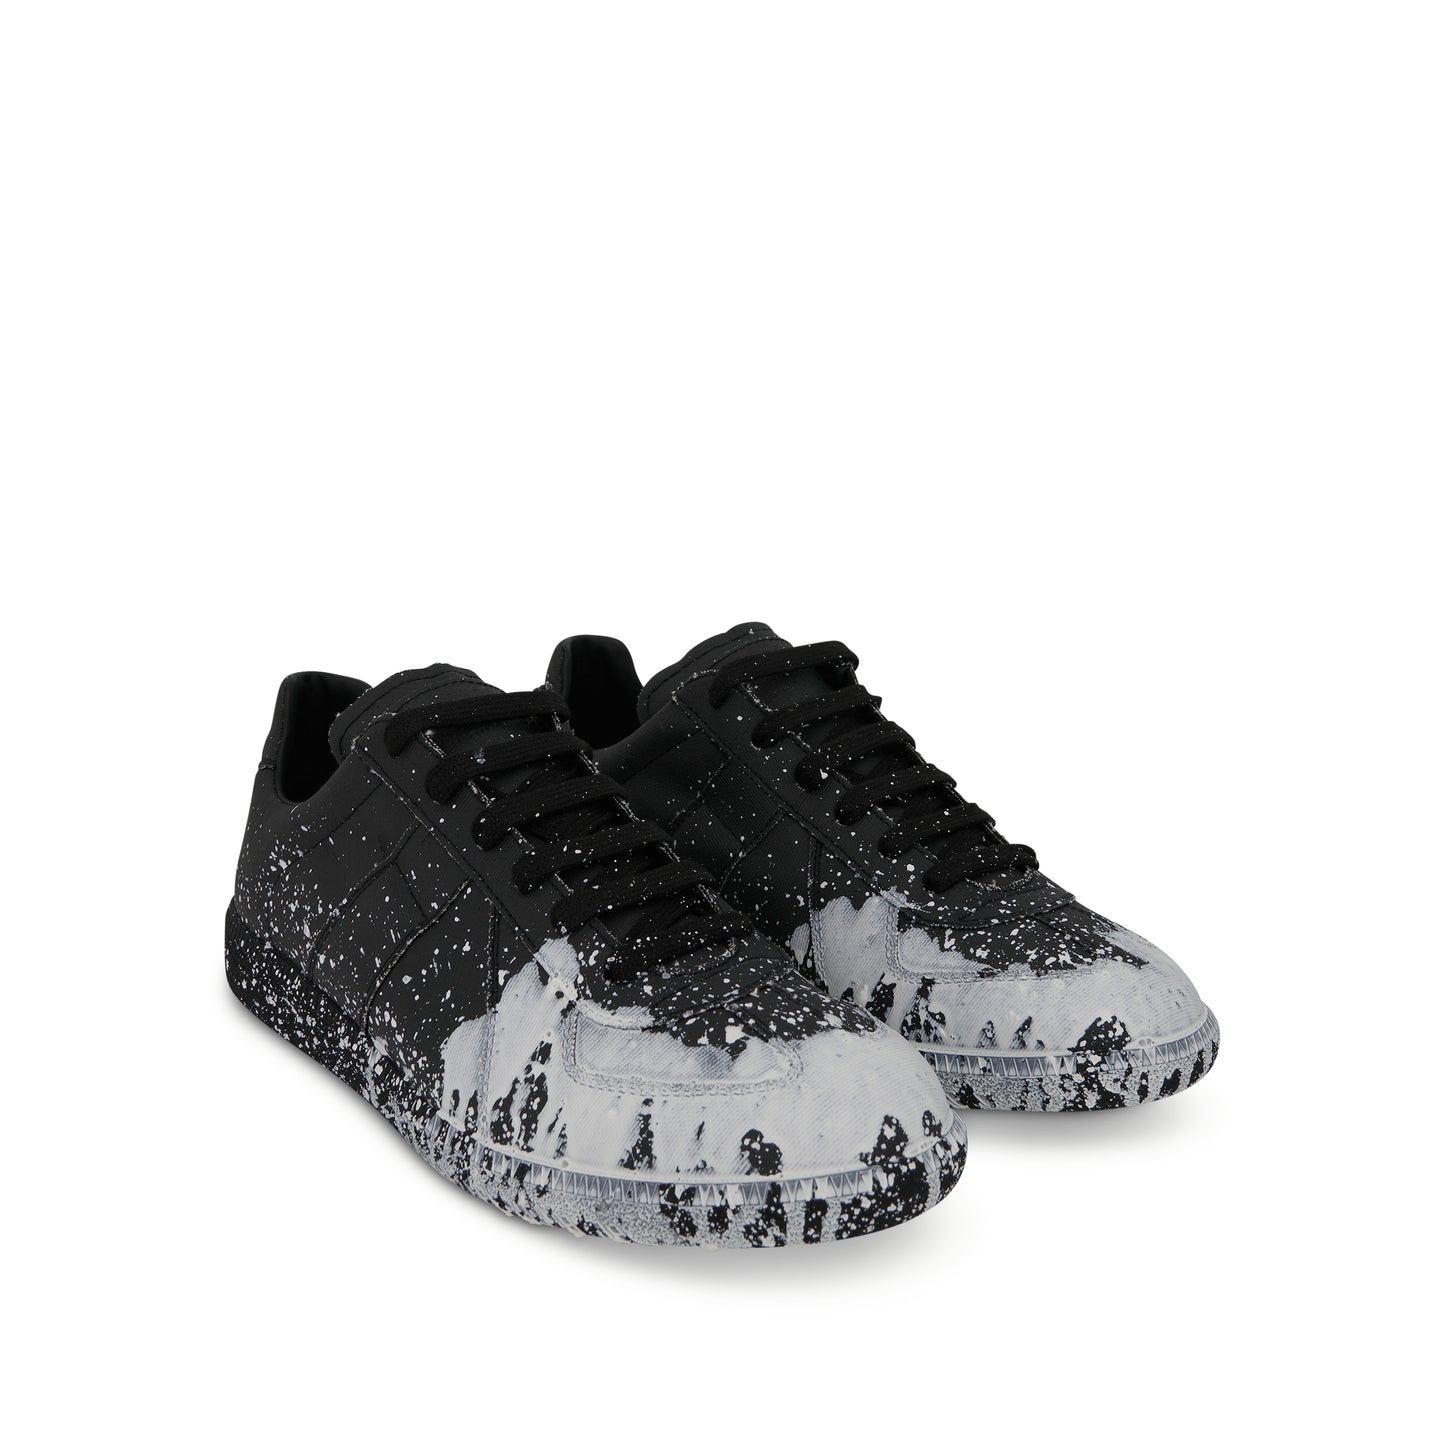 Replica Painter Low Sneakers in Black/White